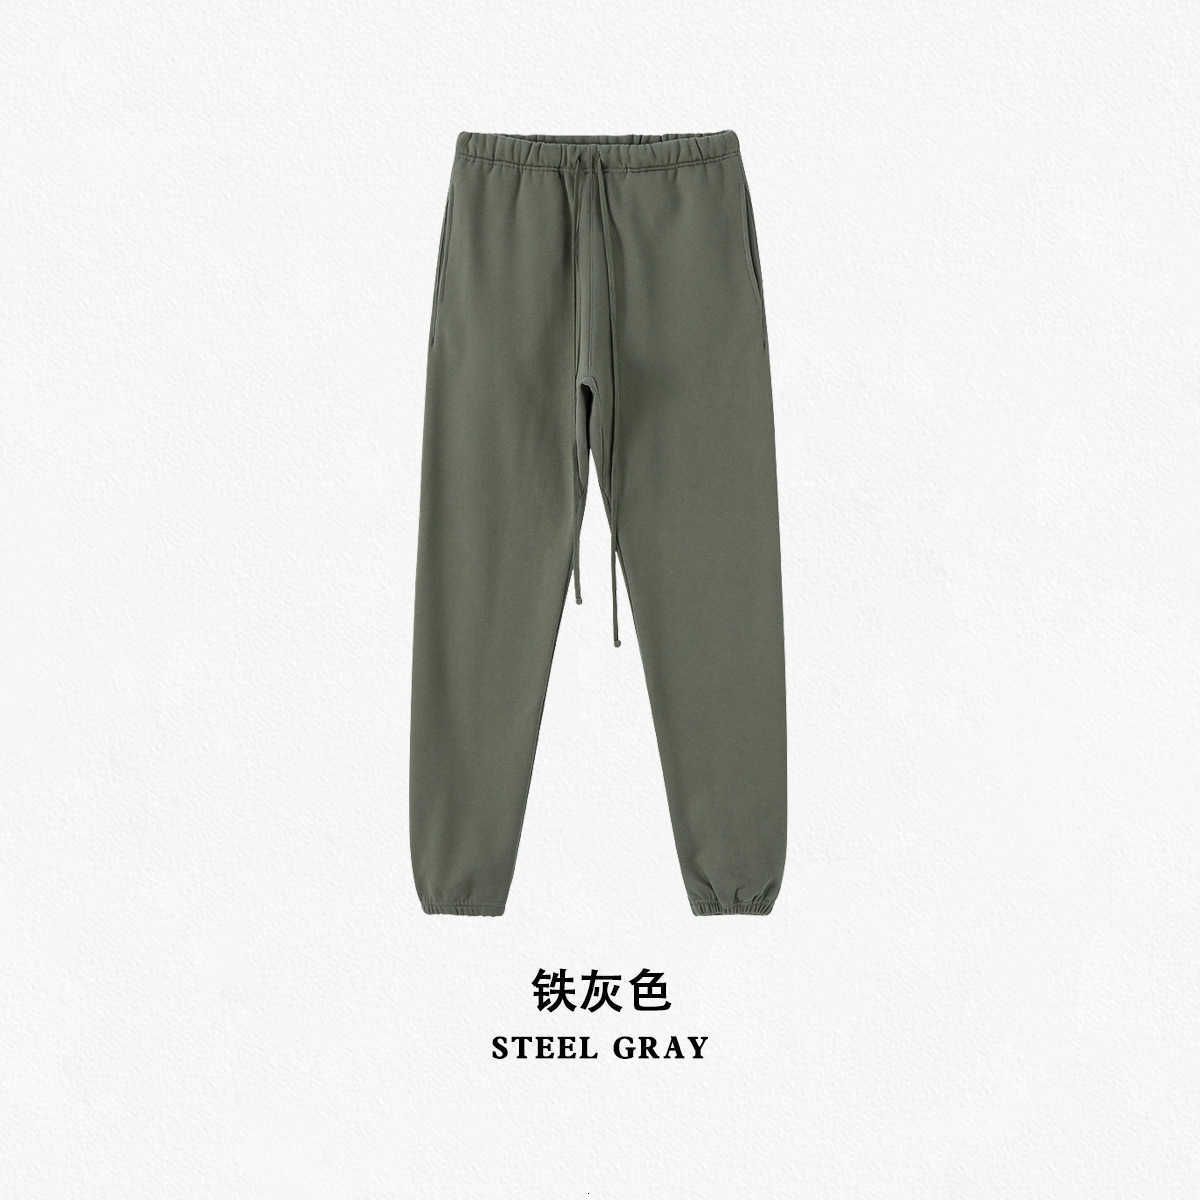 Iron Grey Trousers